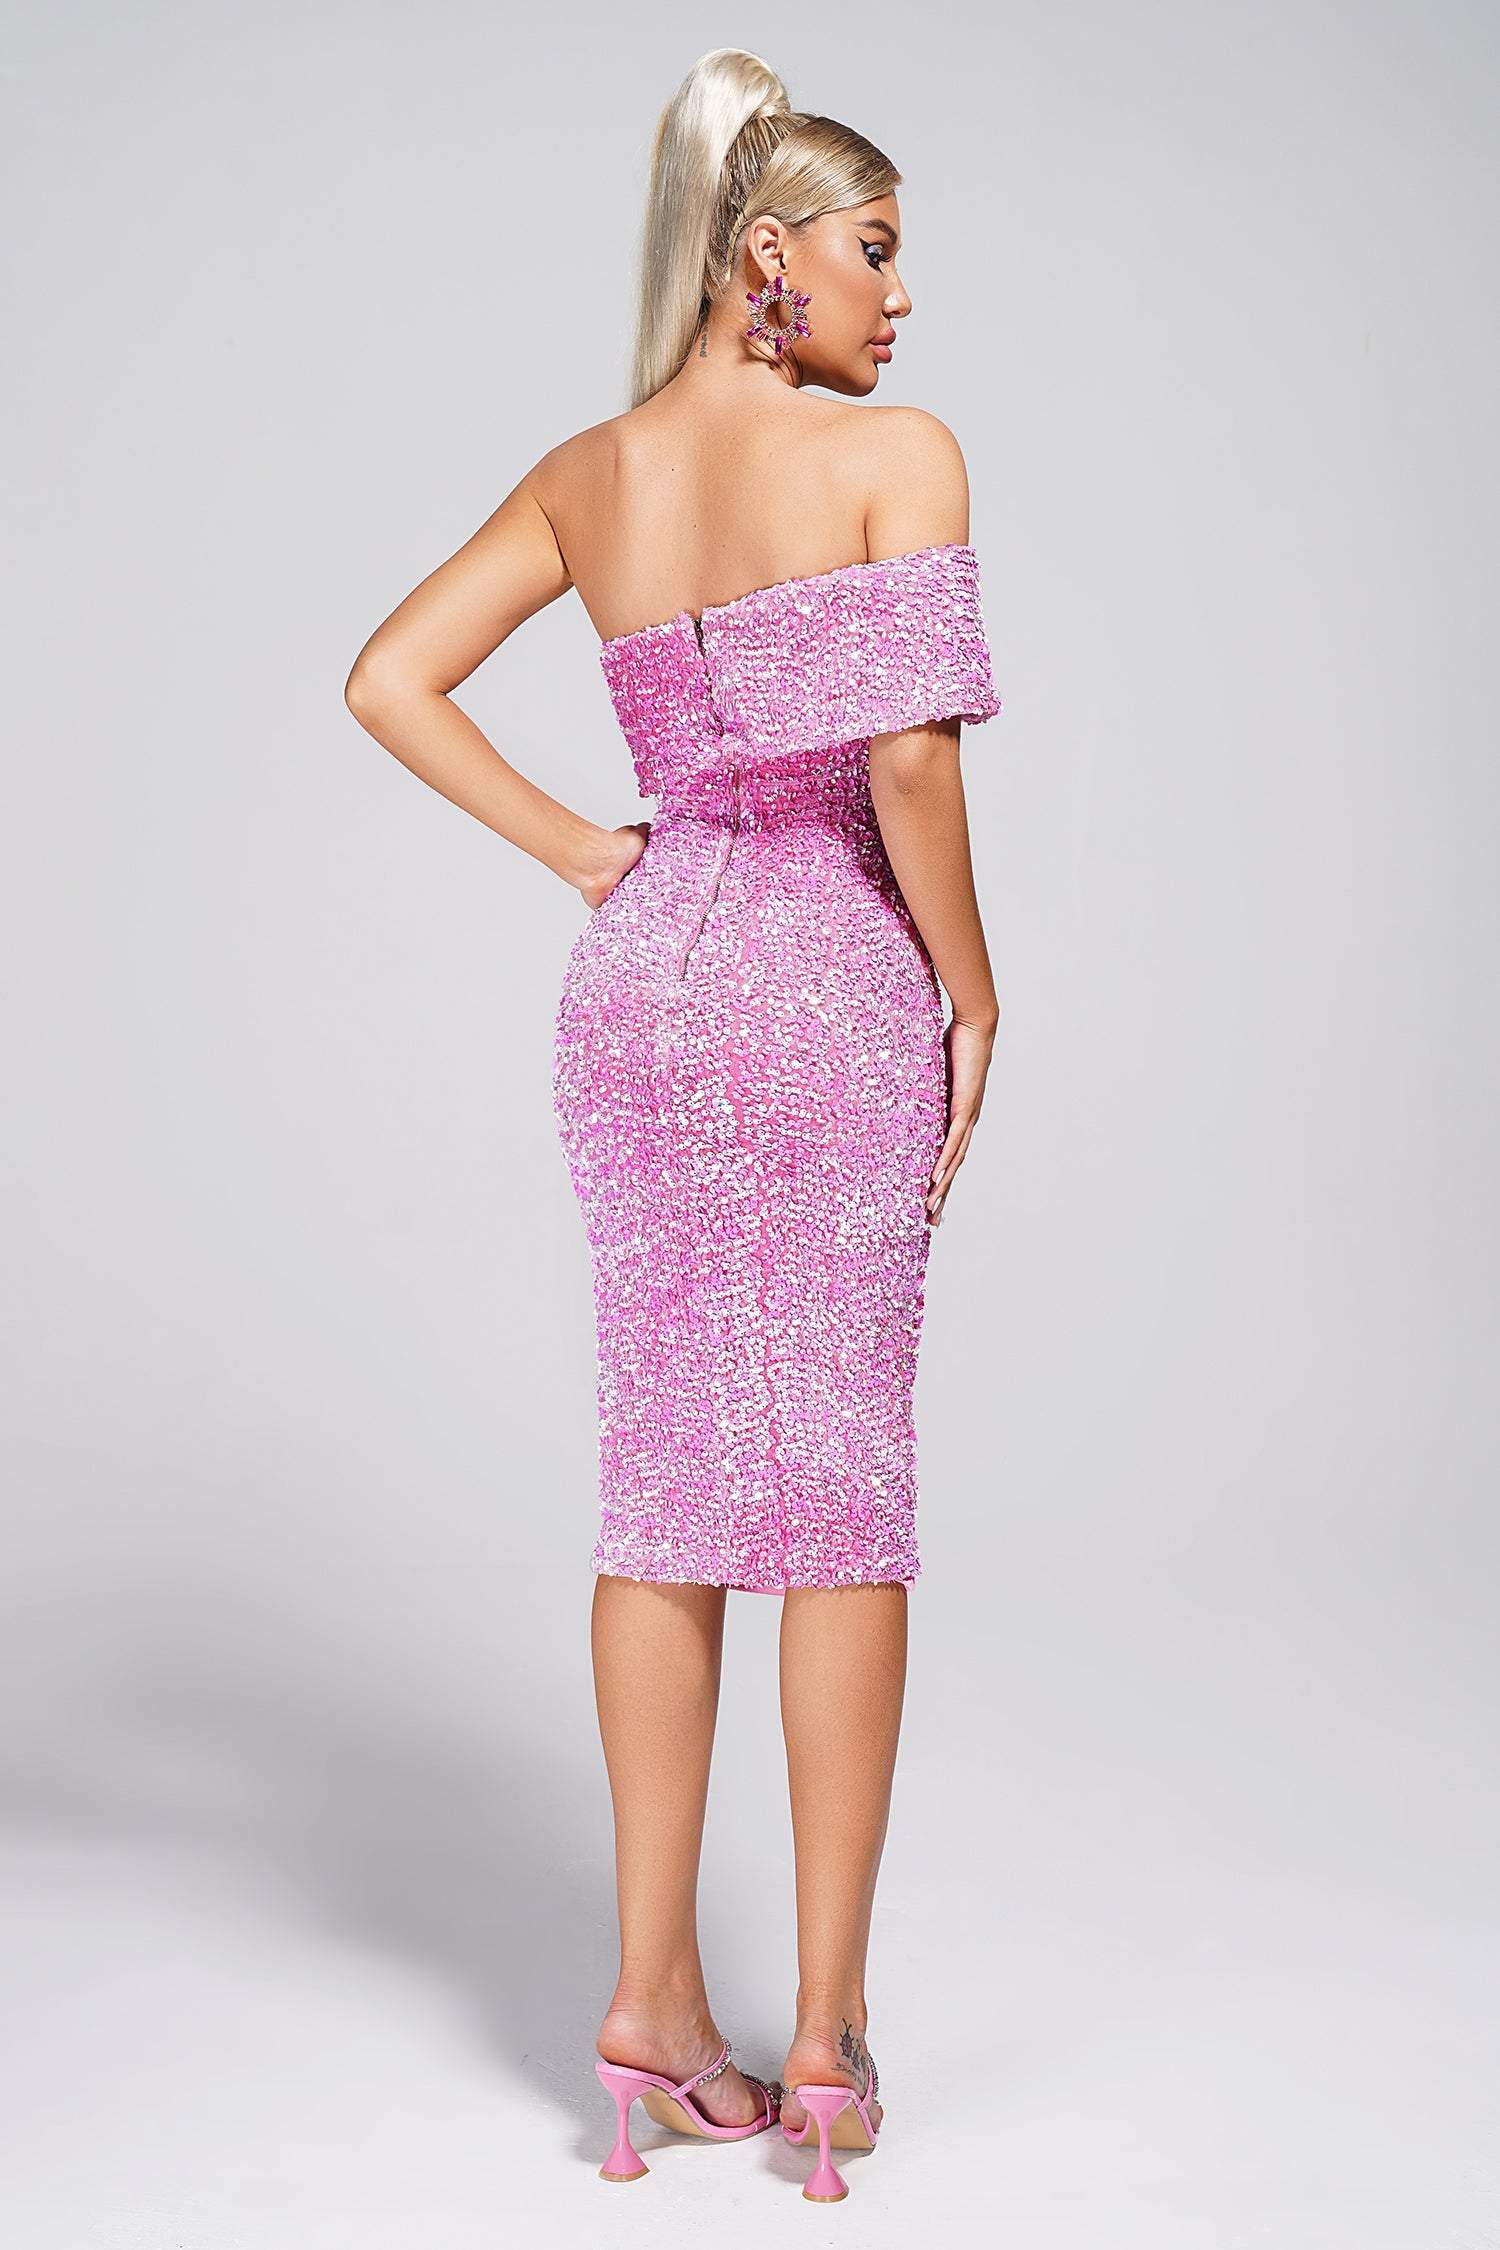 Giaga Purple One Shoulder Sequin Midi Dress - Pink